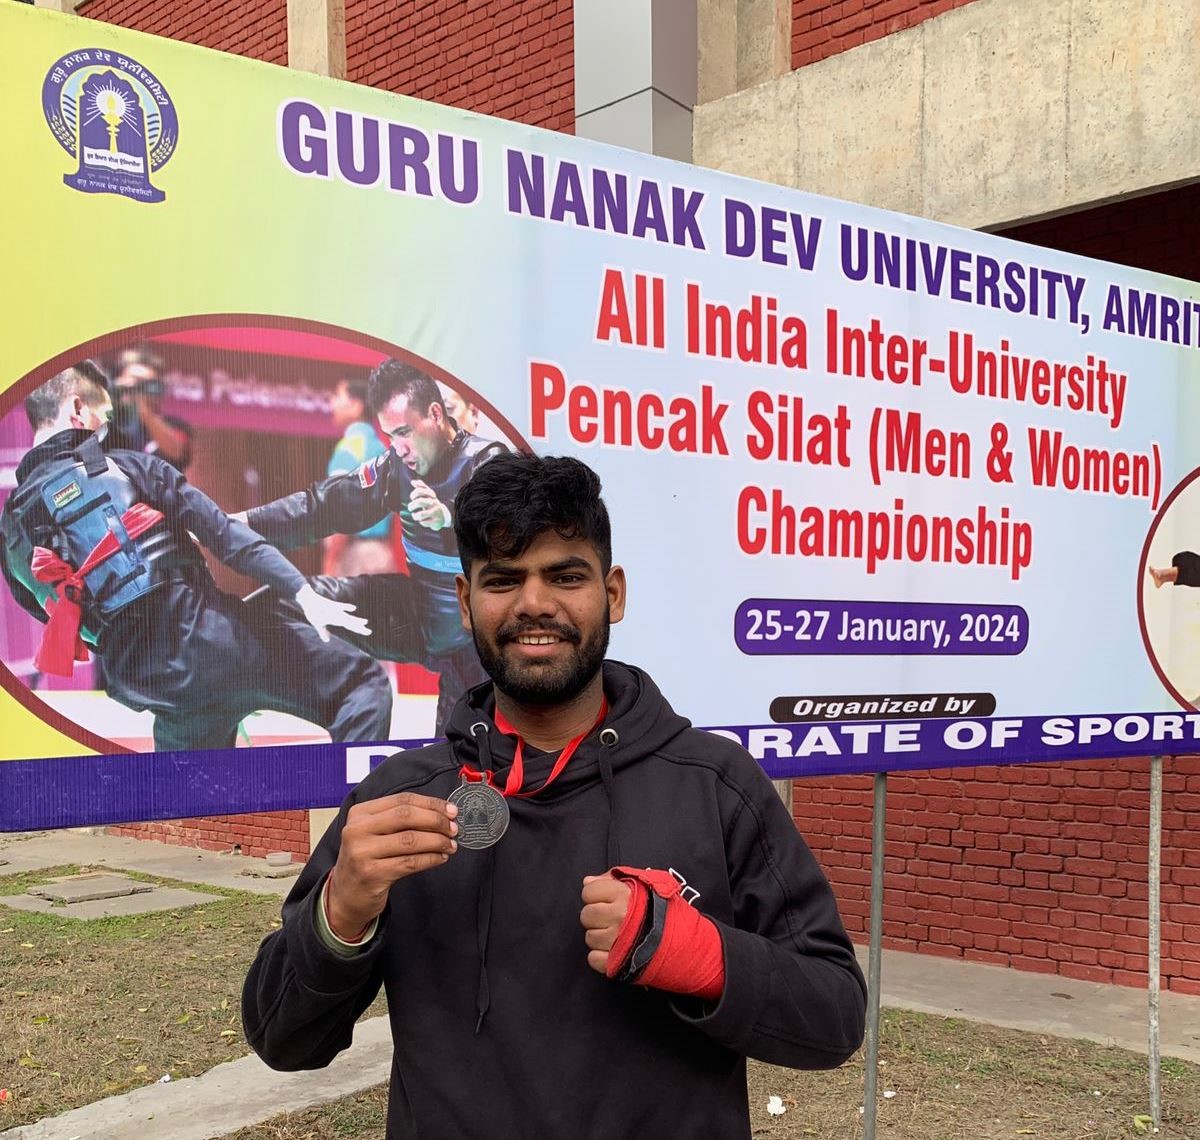 All India Inter-University Pencak Silat (Men) Championship 2023-24